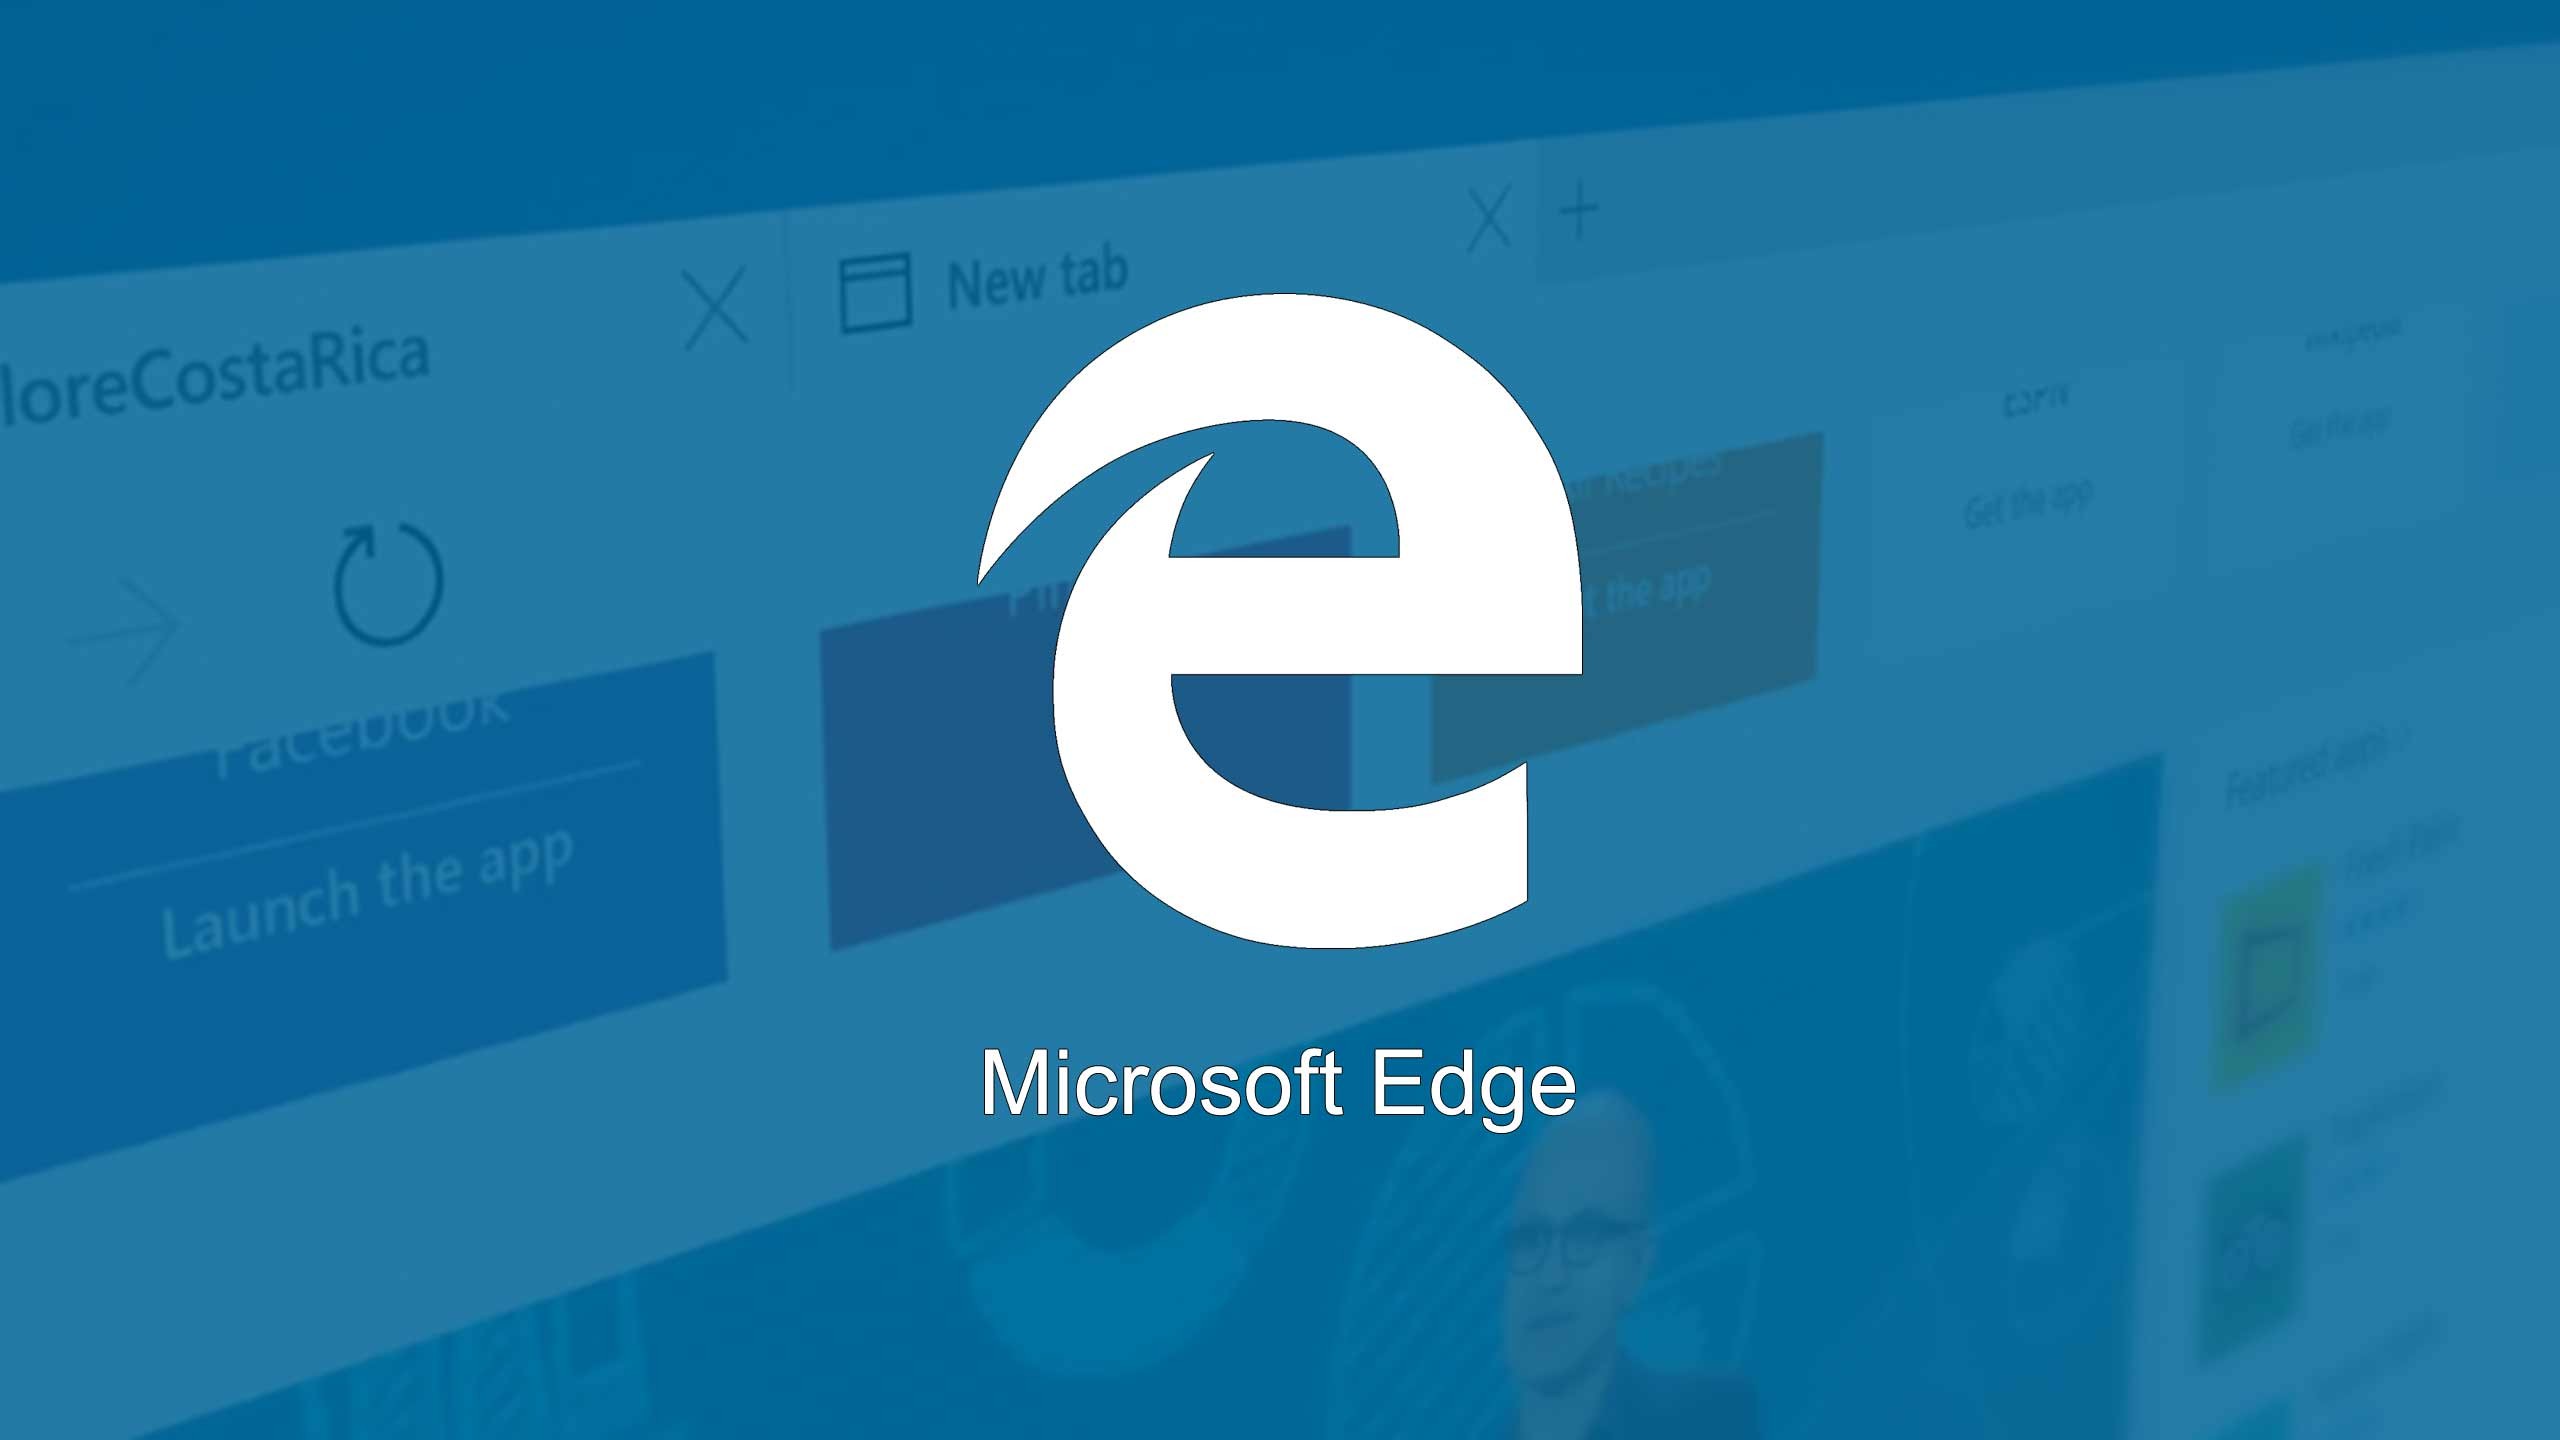 Microsoft добавляет веб-аутентификацию вместо паролей в браузер Edge